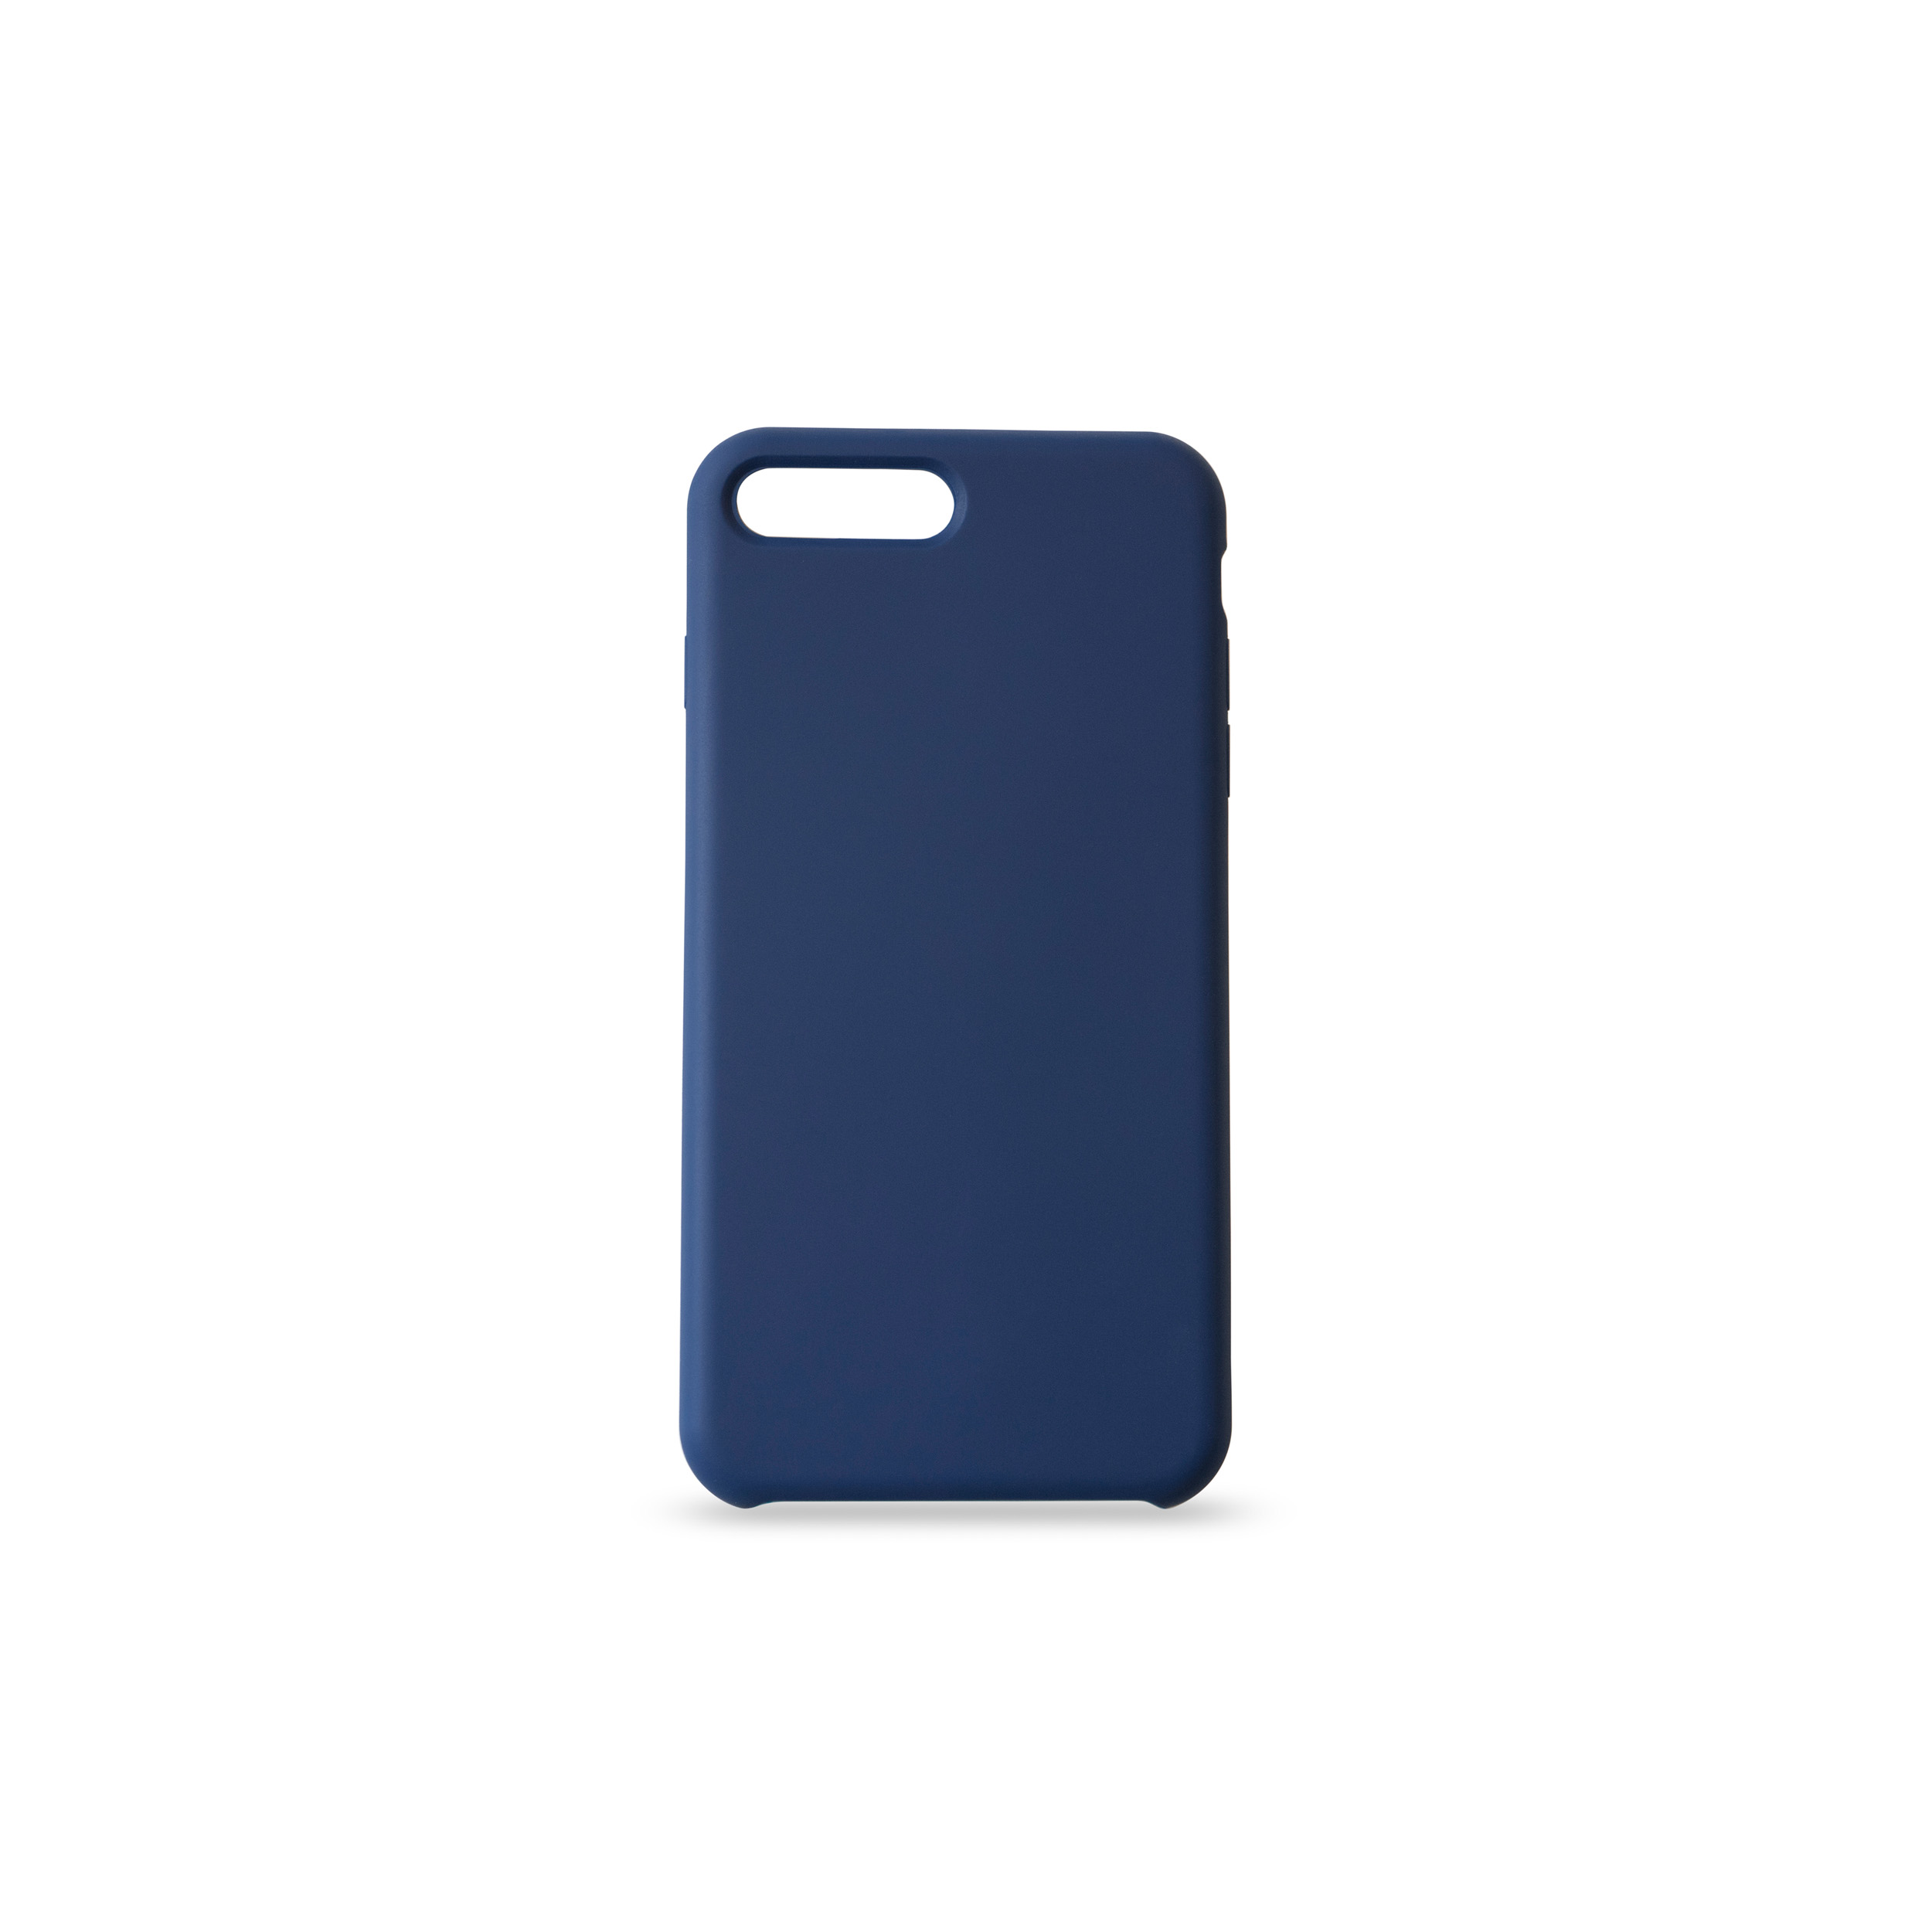 KMP Plus Silikon für Schutzhülle 8 Blue, blue IPhone Backcover, Midnight midnight Plus, iPhone 8 Apple,